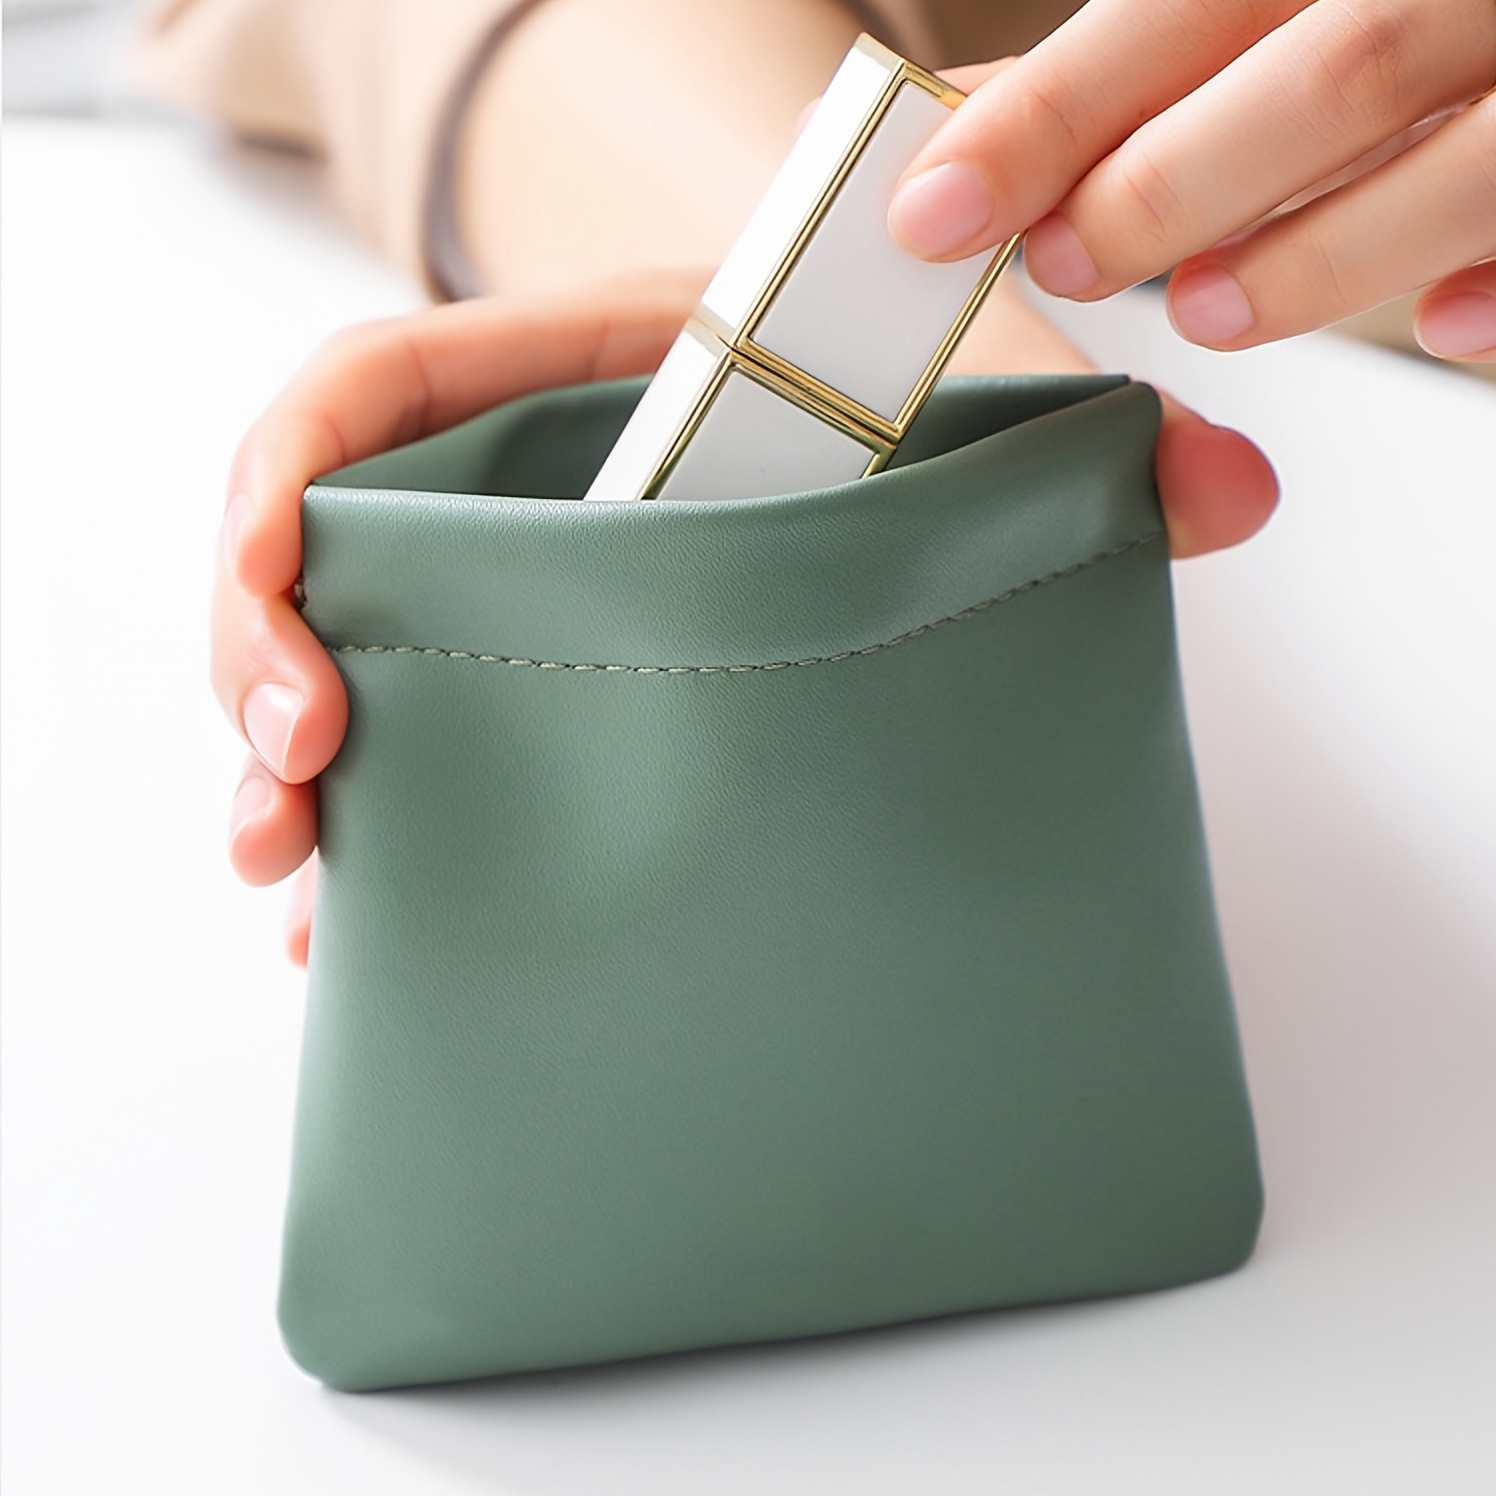 Medium Appliqué Khadi Silk Travel Cosmetic Bag – Make it Mine